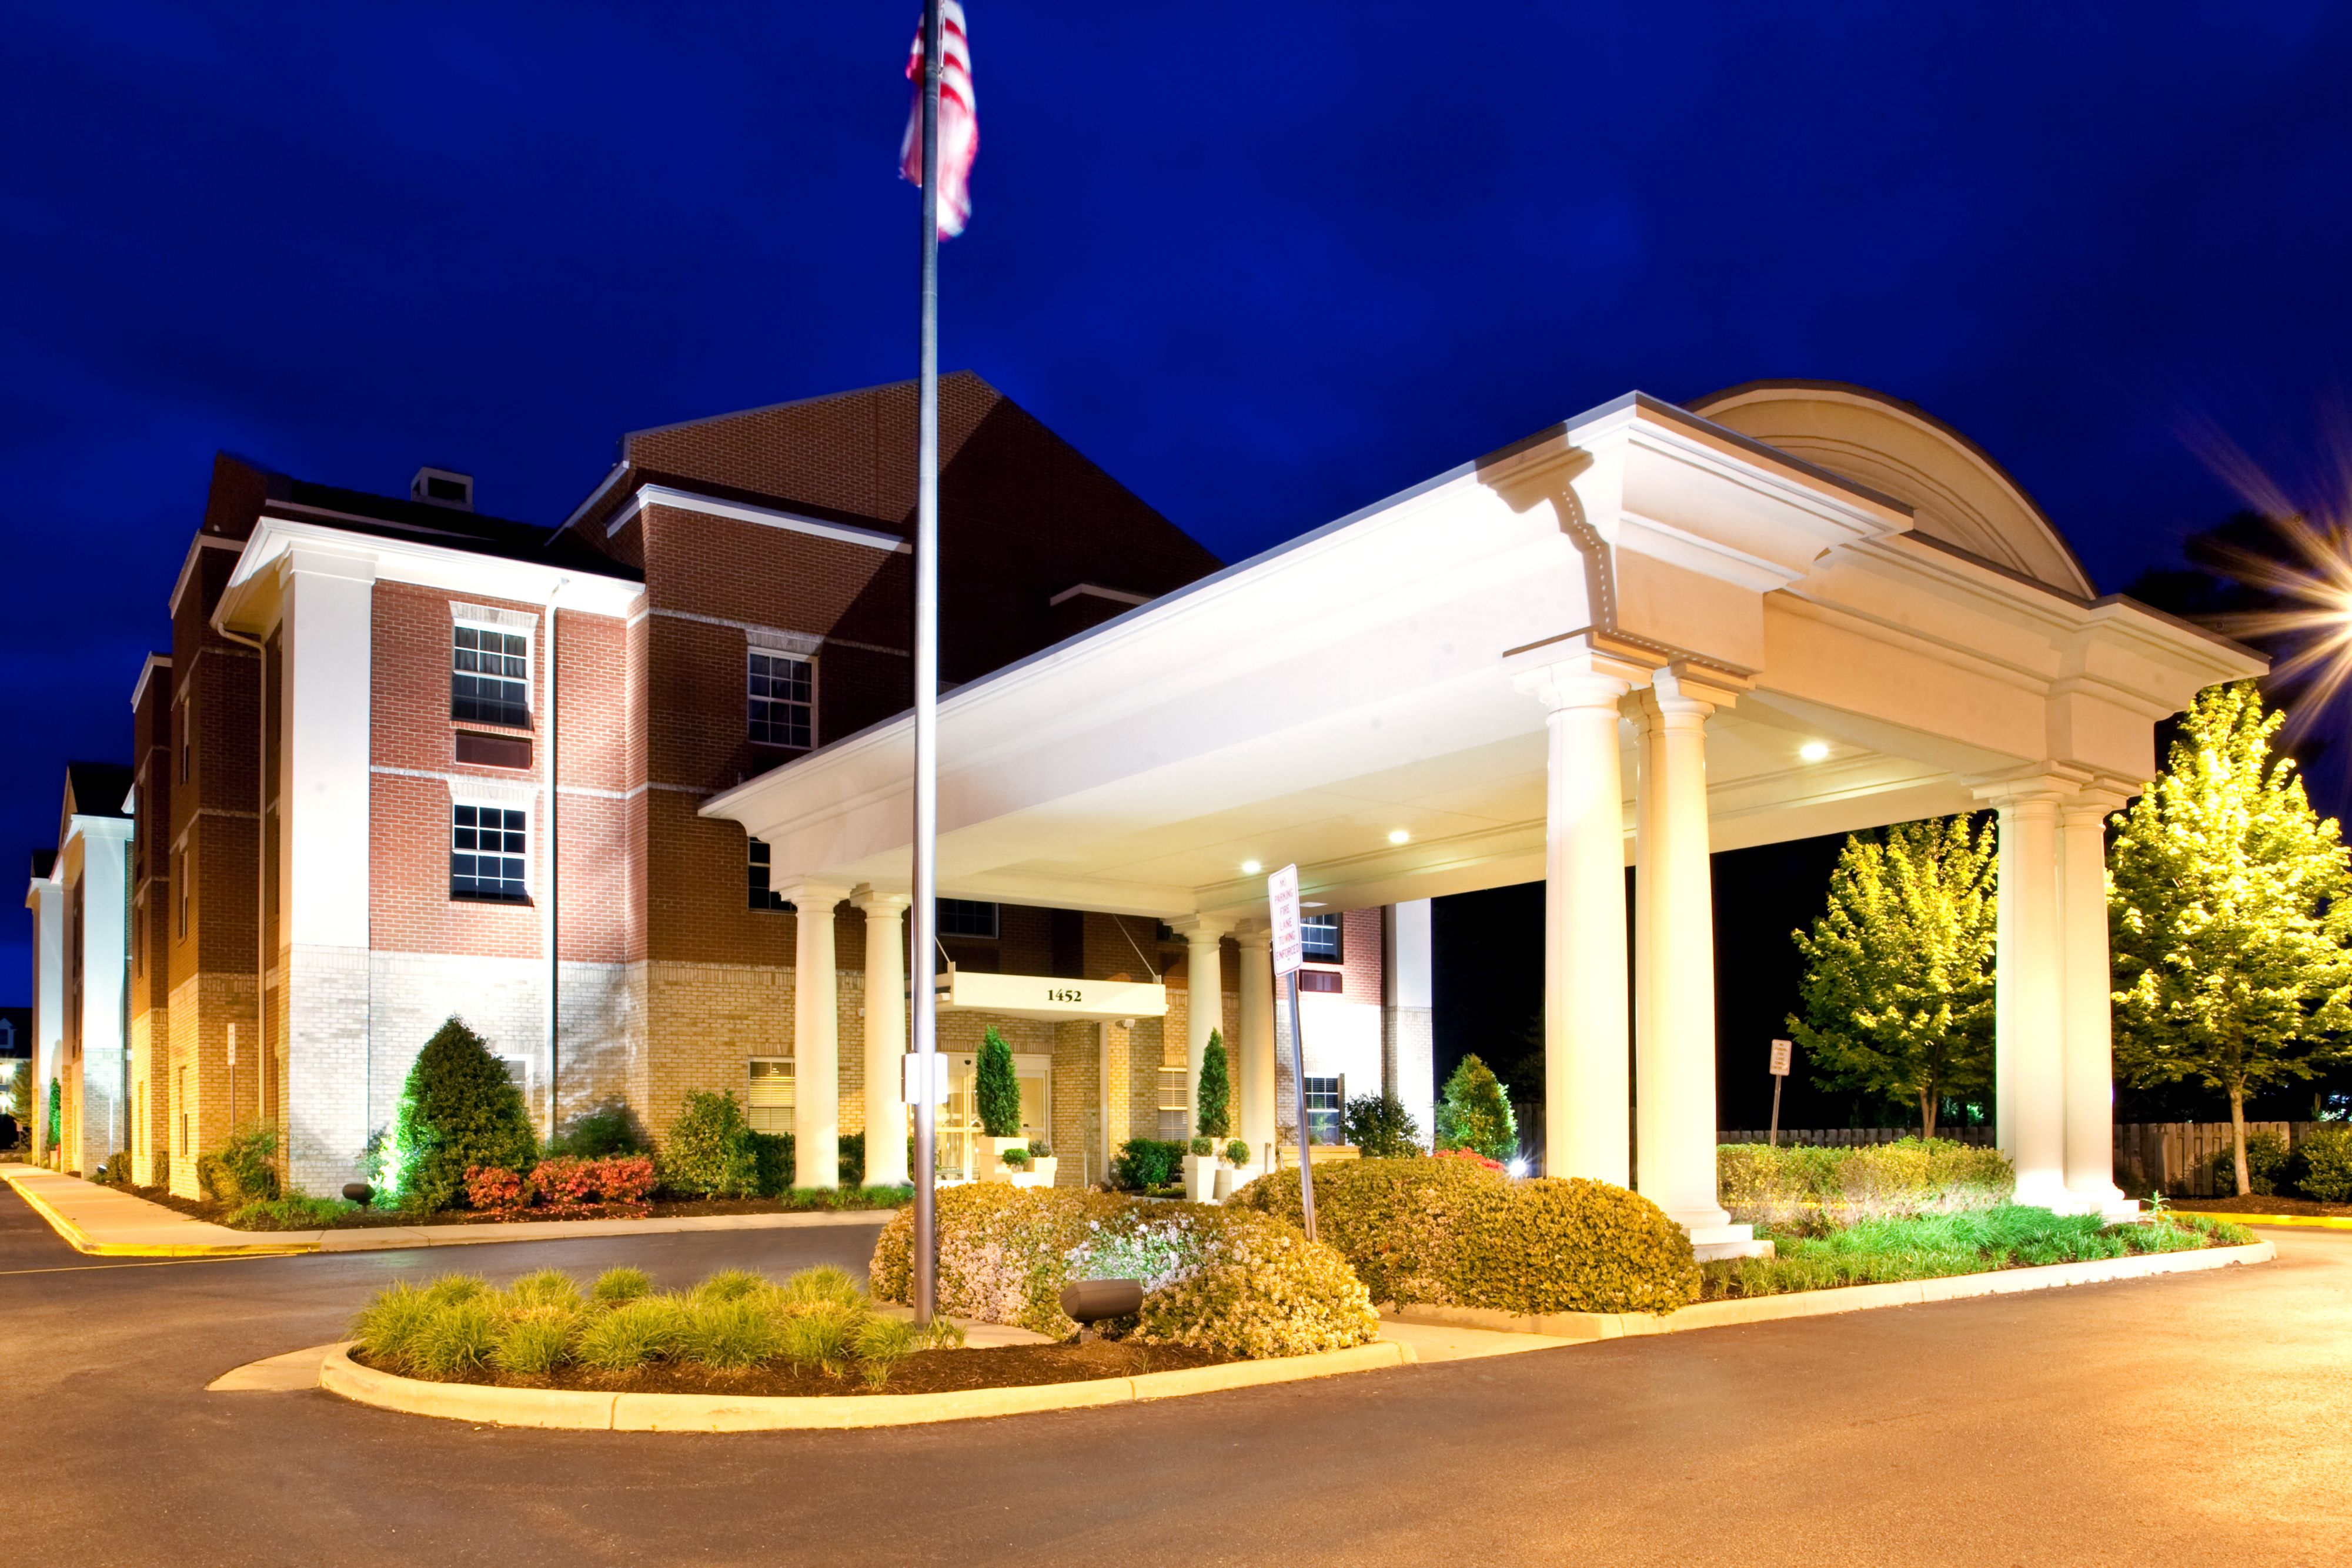 Holiday Inn Express & Suites Williamsburg in Williamsburg, VA | Whitepages